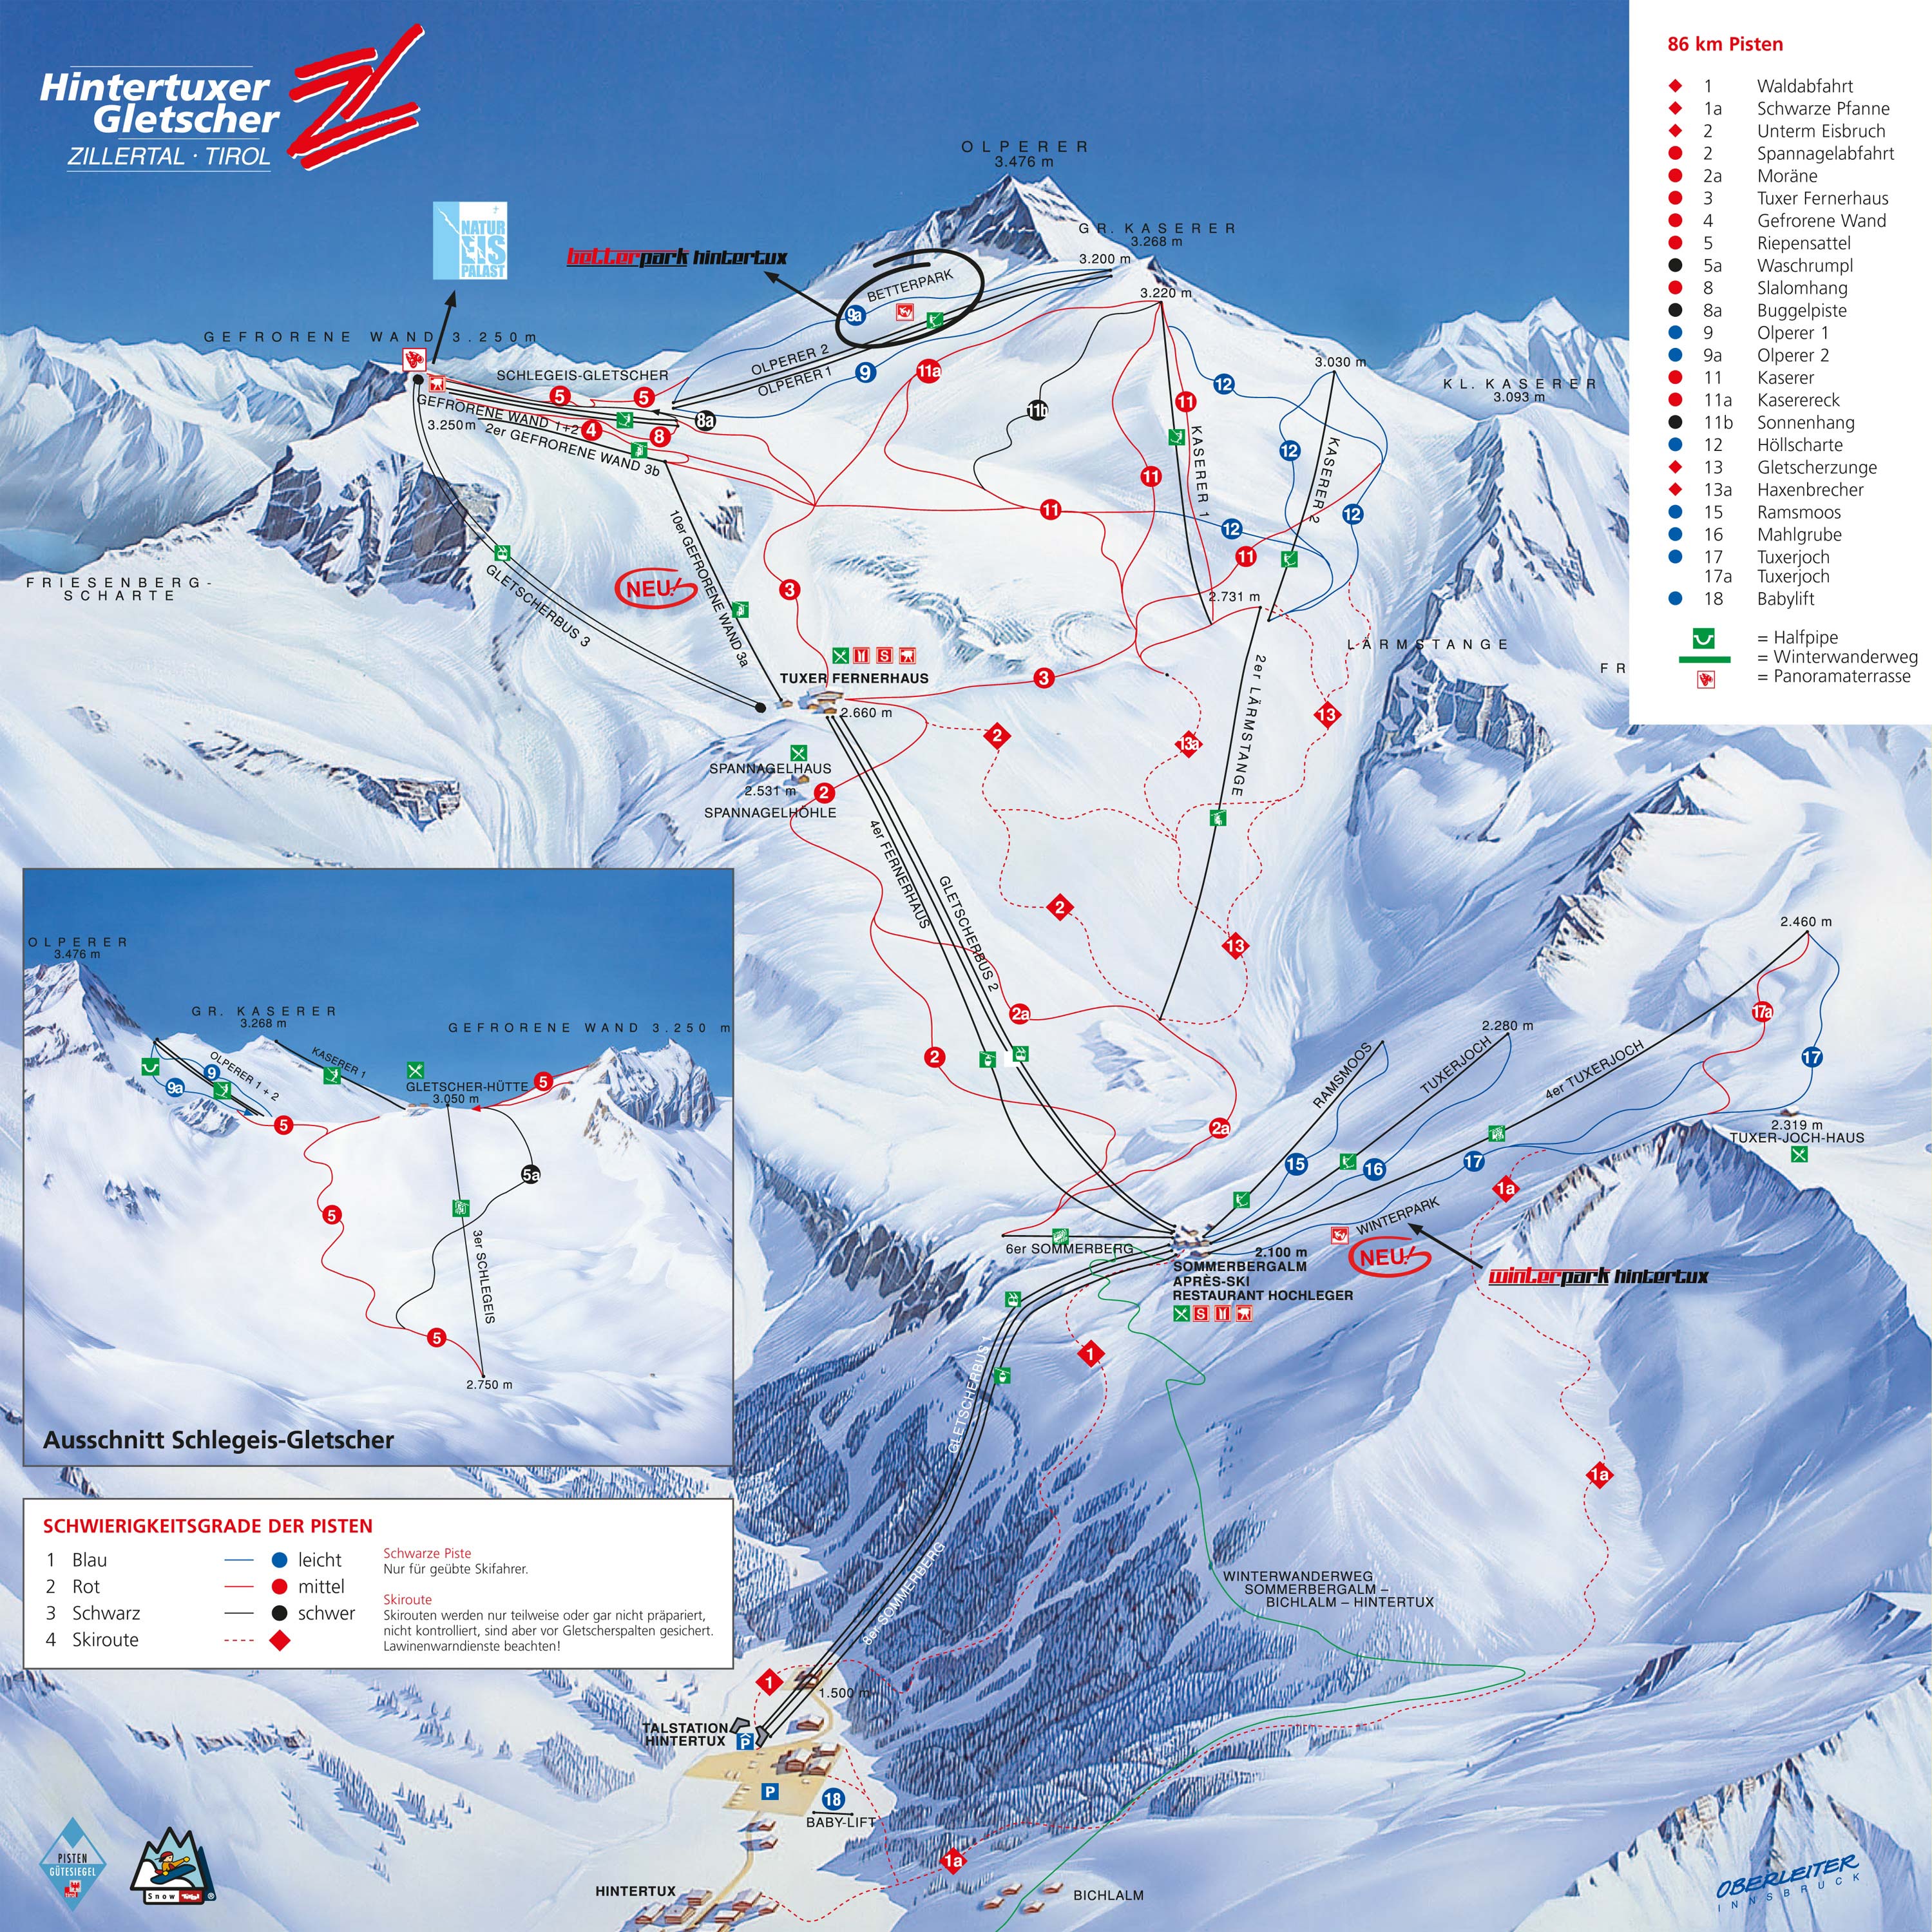 https://skitours.com.ua/sites/default/files/images/resorts/Austria/Hintertux/hintertux_pistenplan_l2.jpg